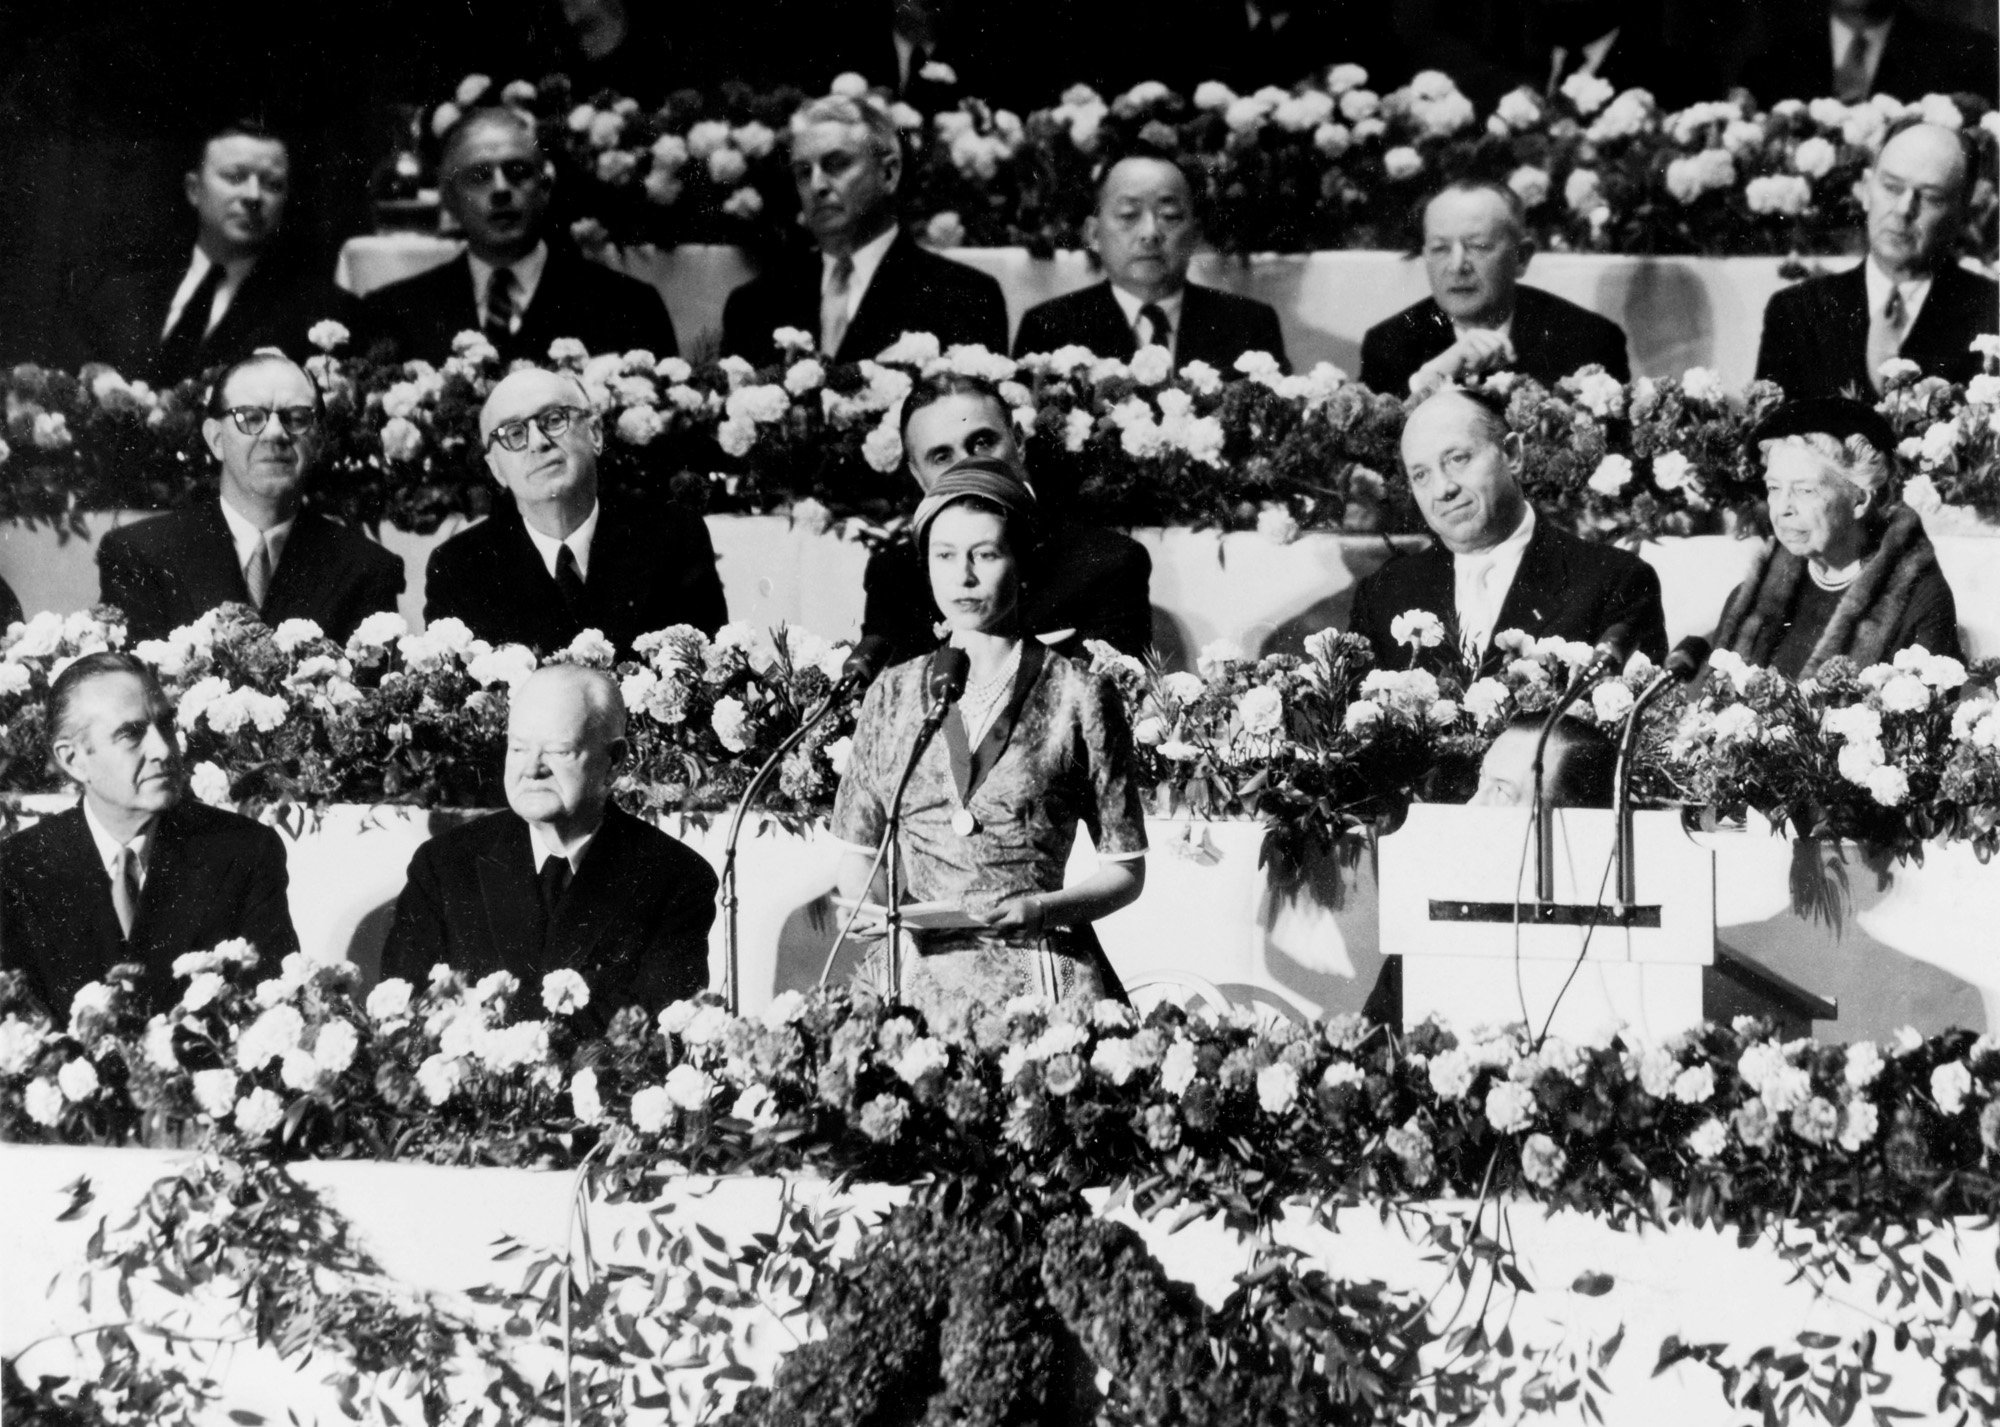 La reine Elizabeth II prononçant un discours au Waldorf Astoria - 1957